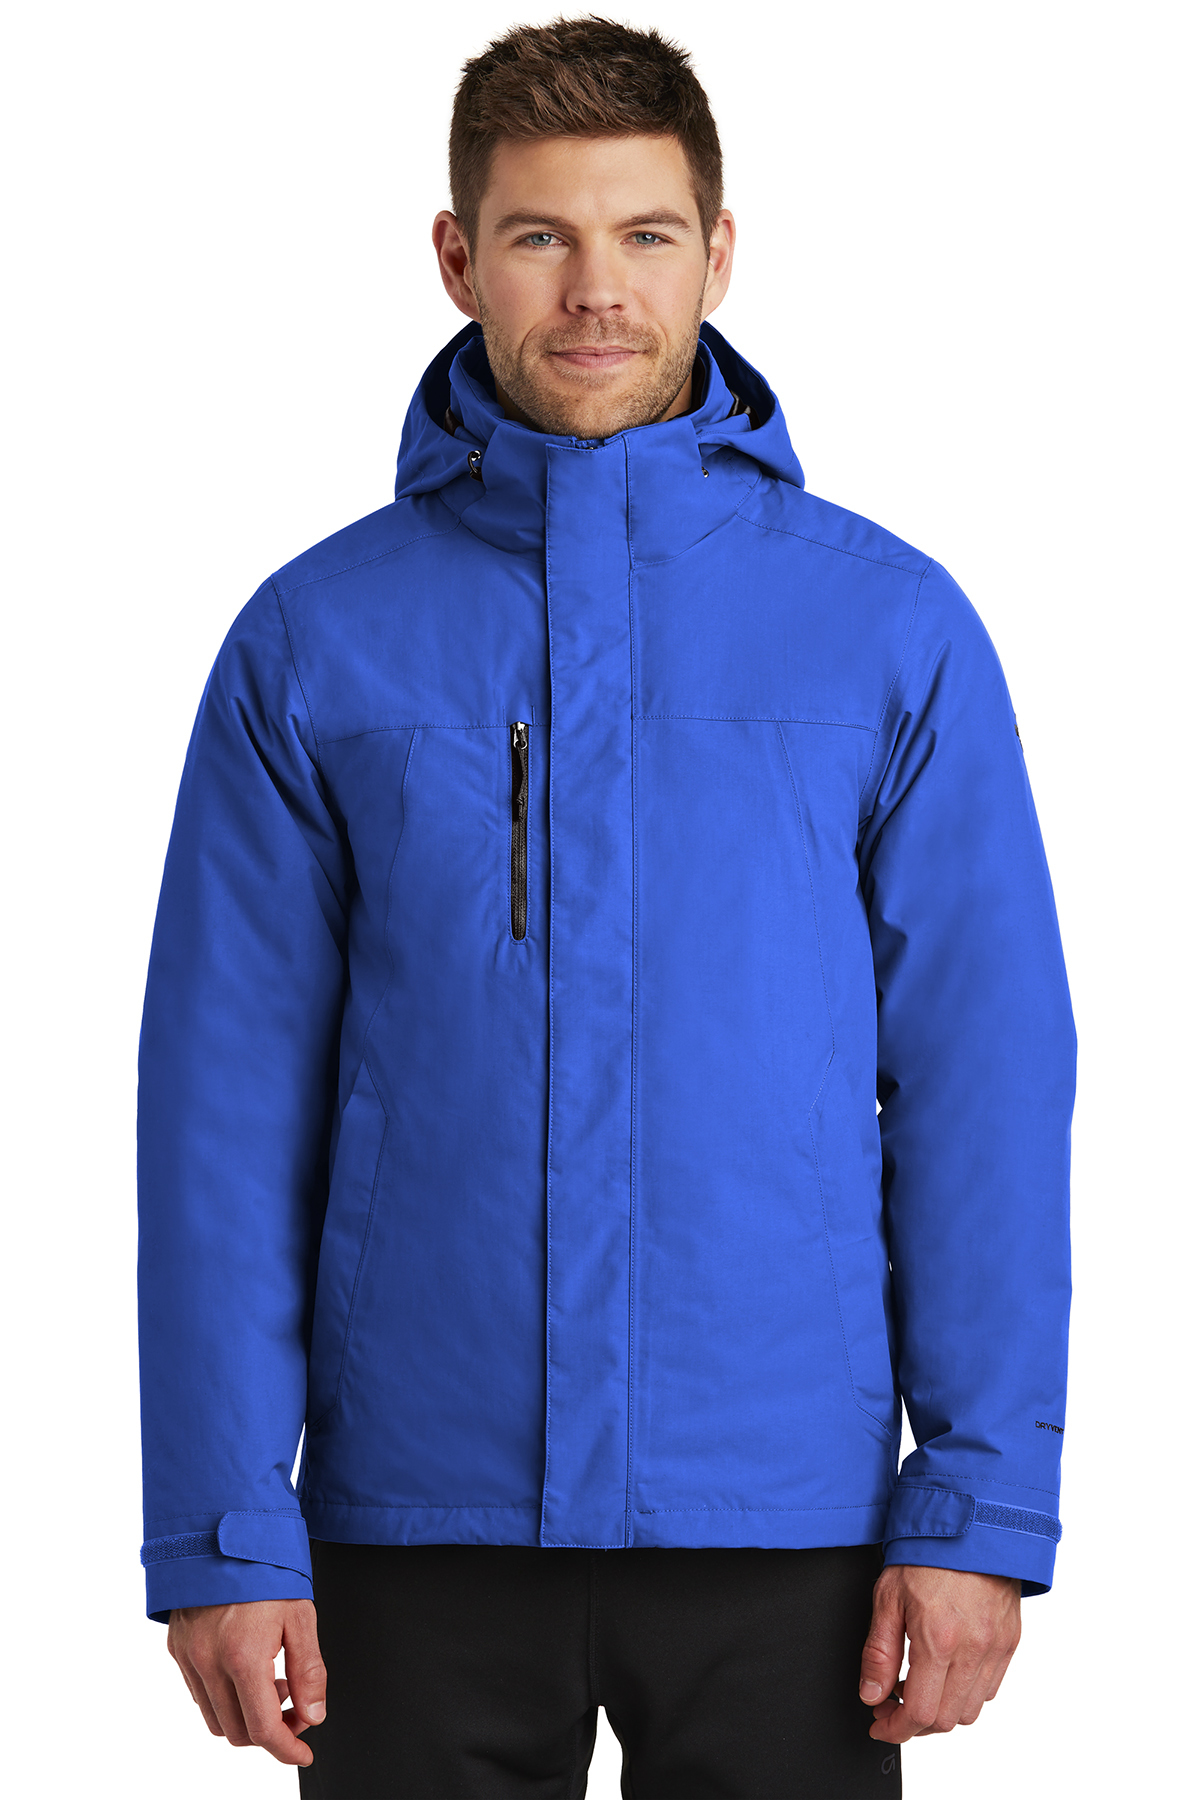 north face jacket removable liner